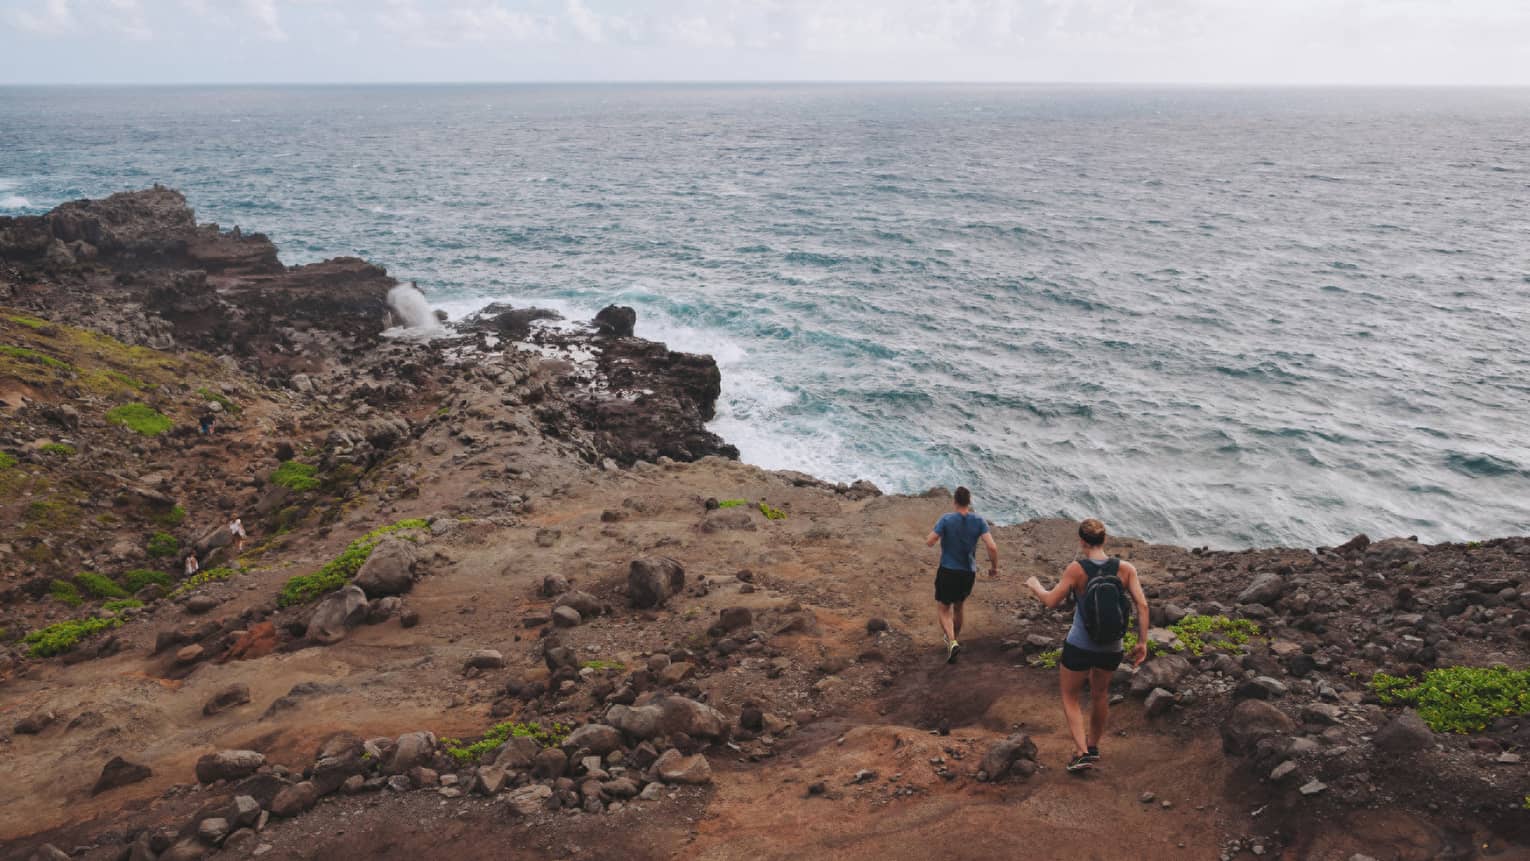 Two people hike down dirt-covered path, rocks towards ocean